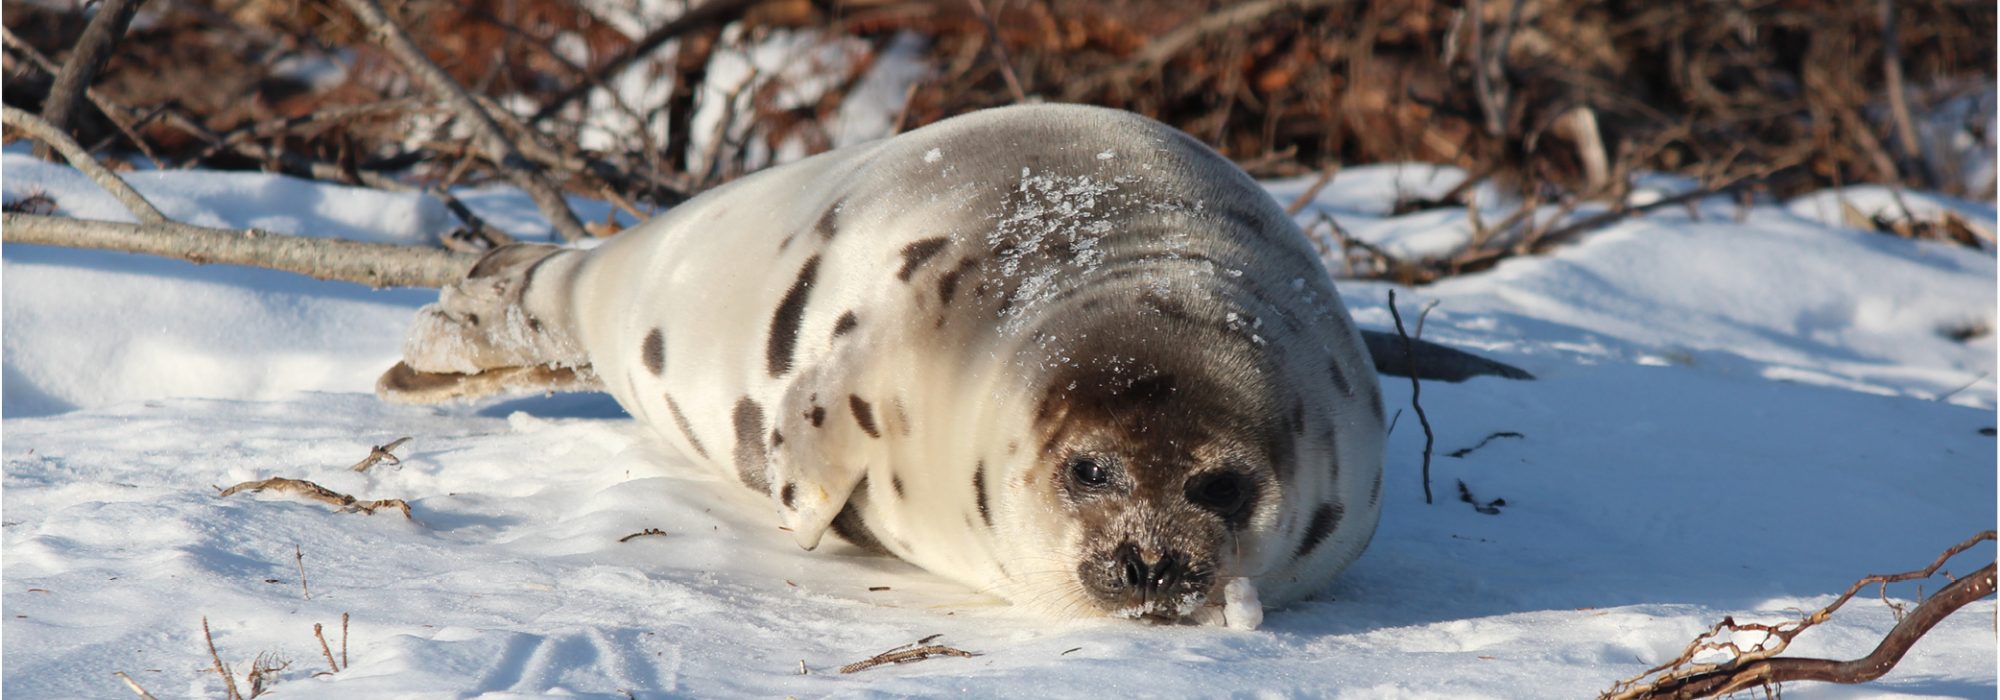 Seal Biology Animal Response Society (MARS)